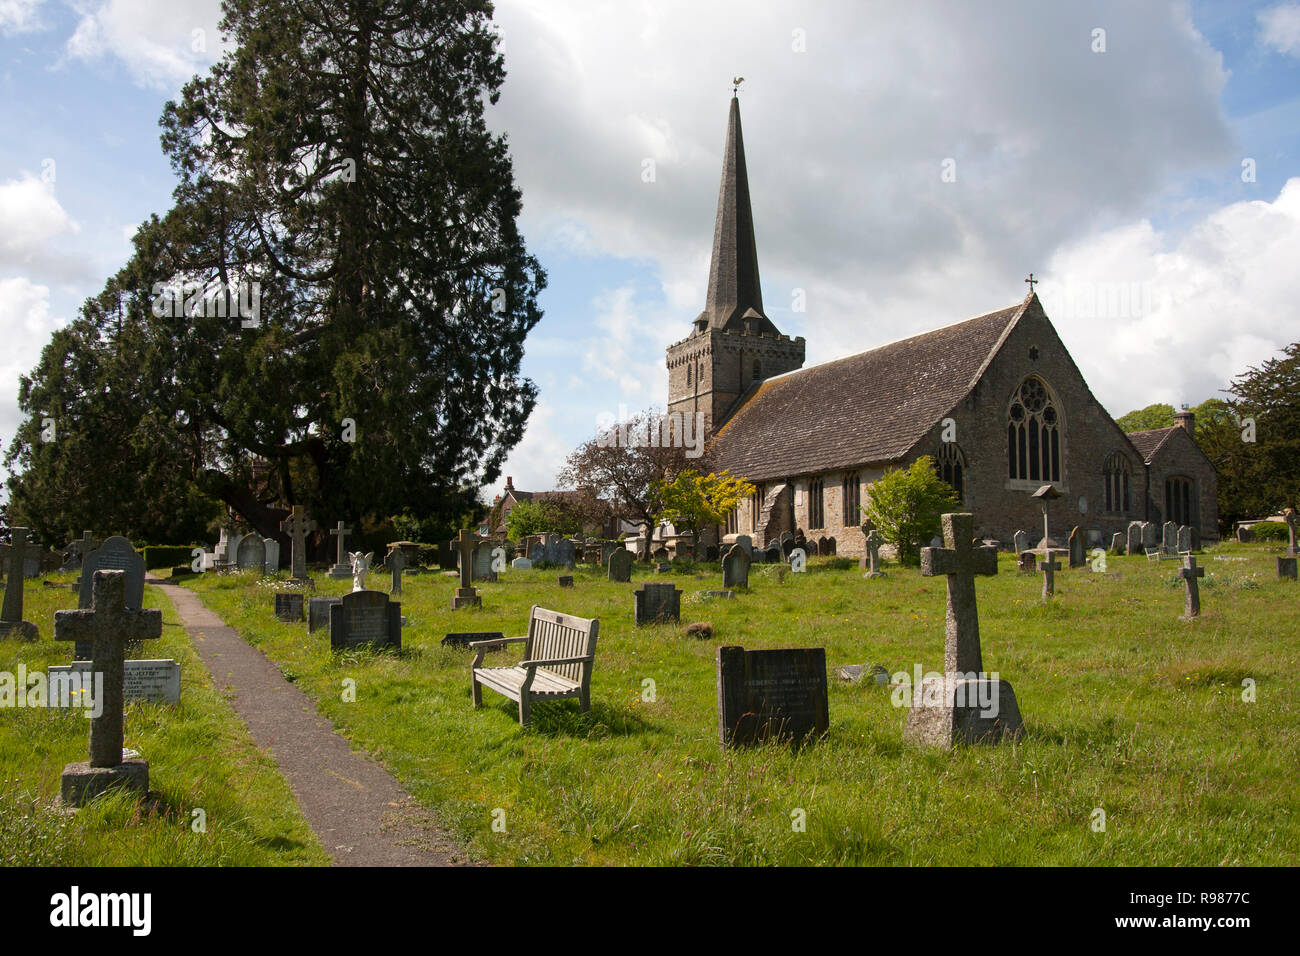 Xi secolo Chiesa della Santa Trinità, Cuckfield, Haywards Heath, West Sussex, in Inghilterra Foto Stock